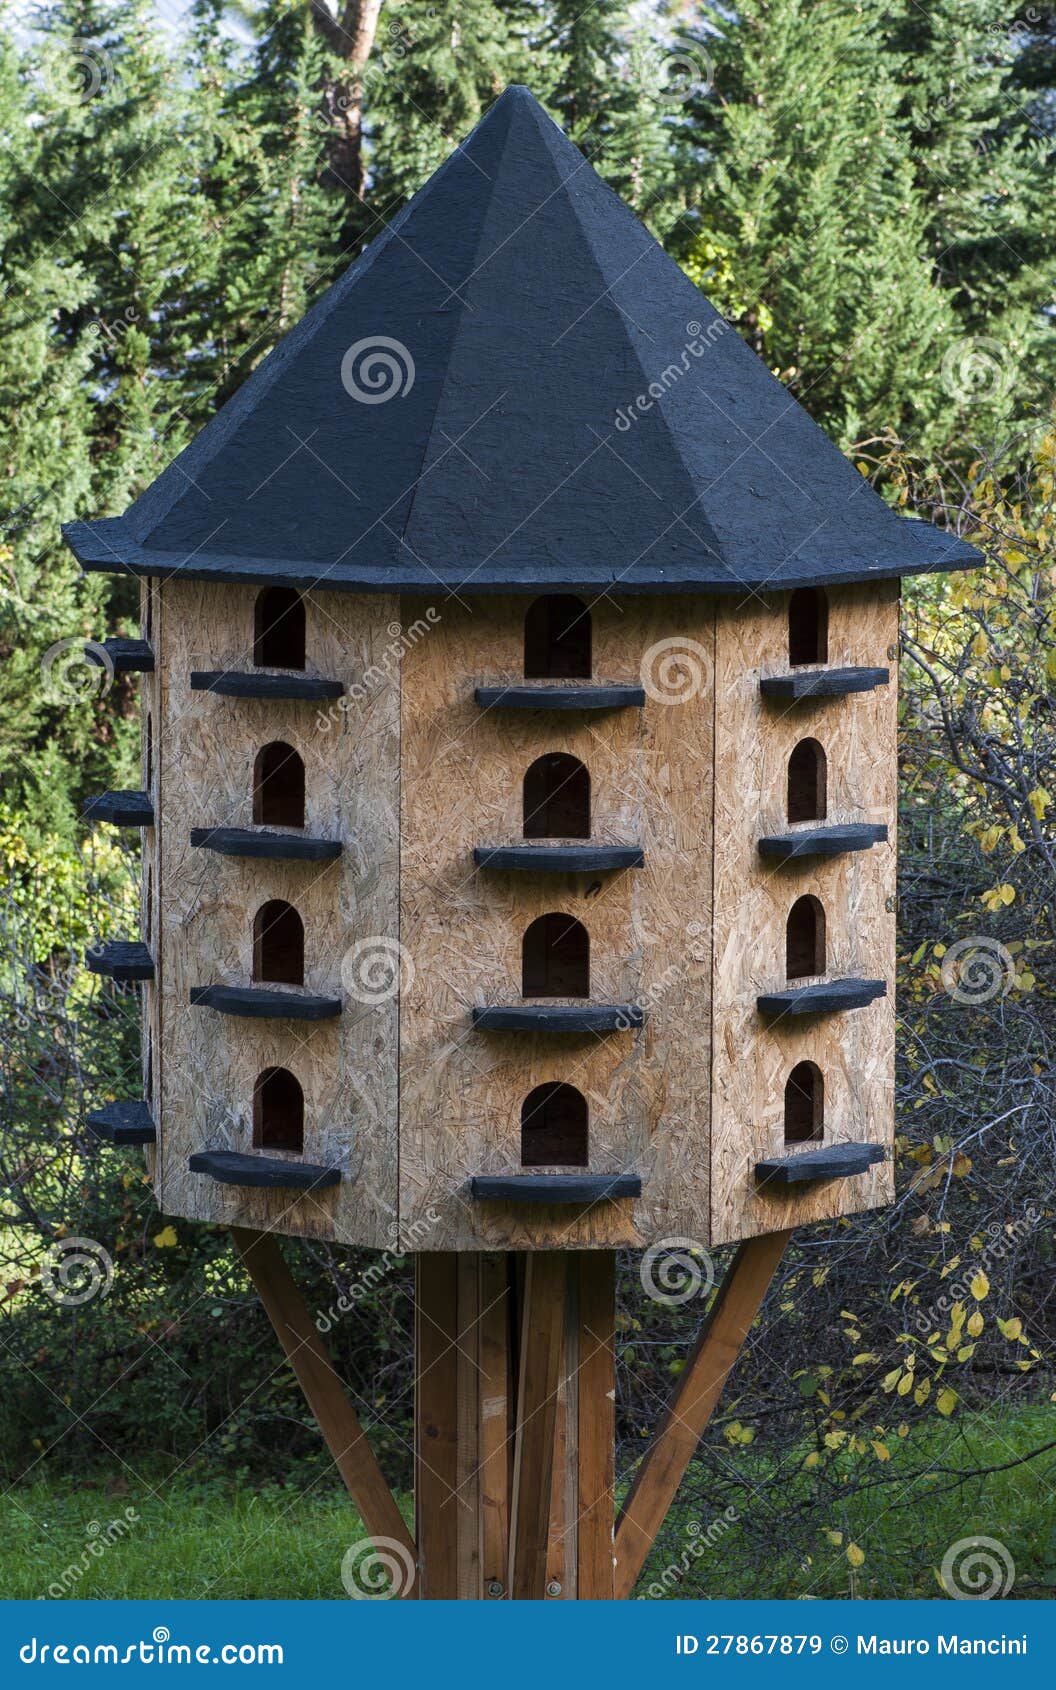 Bird house hotel stock image Image of birdhouses 